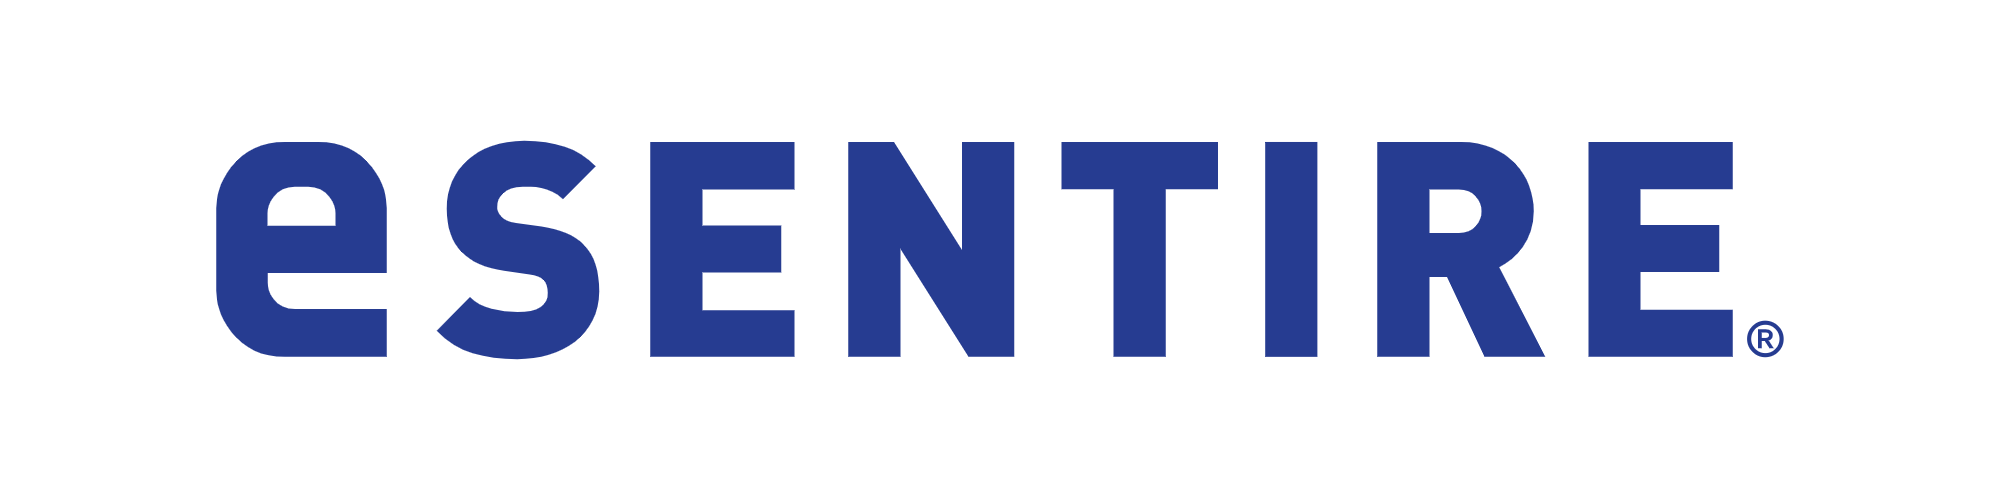 eSentire-Logo